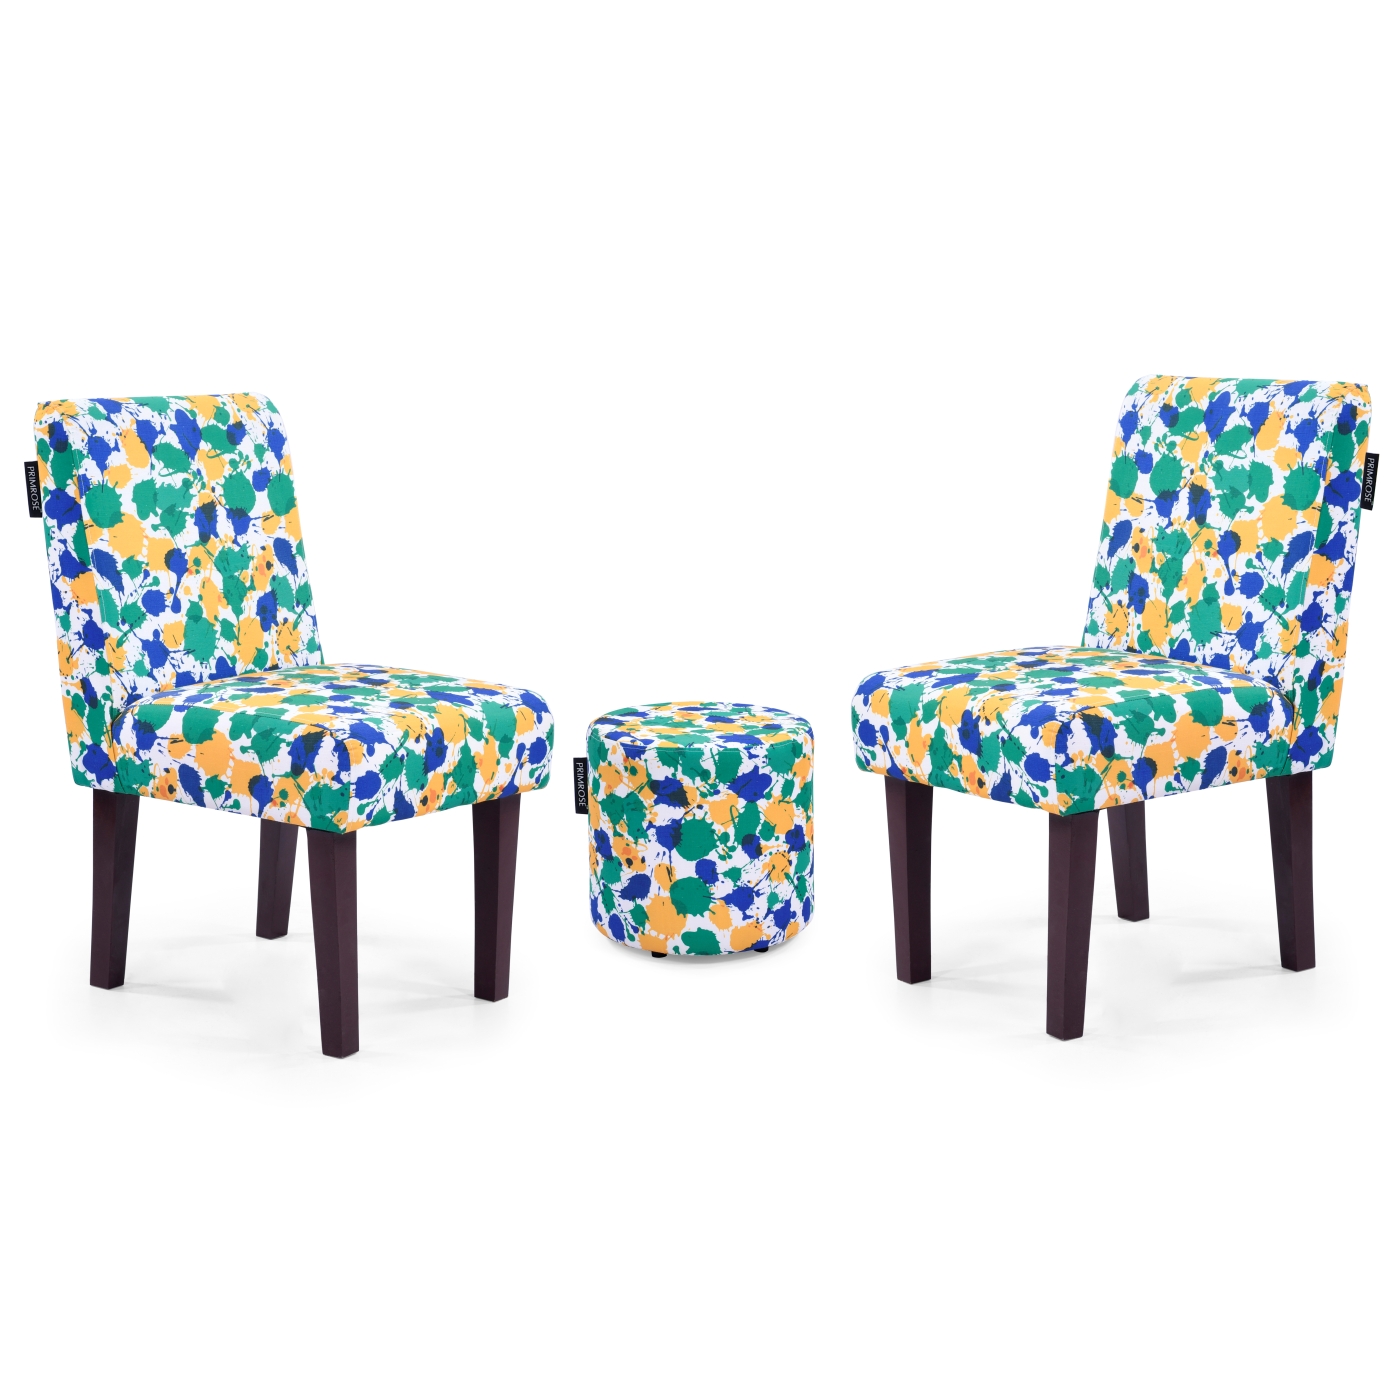 PRIMROSE Betty Splash Flower Digital Printed Faux Linen Fabric Dining Chair Combo (2 Chair+1 Ottoman) - Green, Yellow  